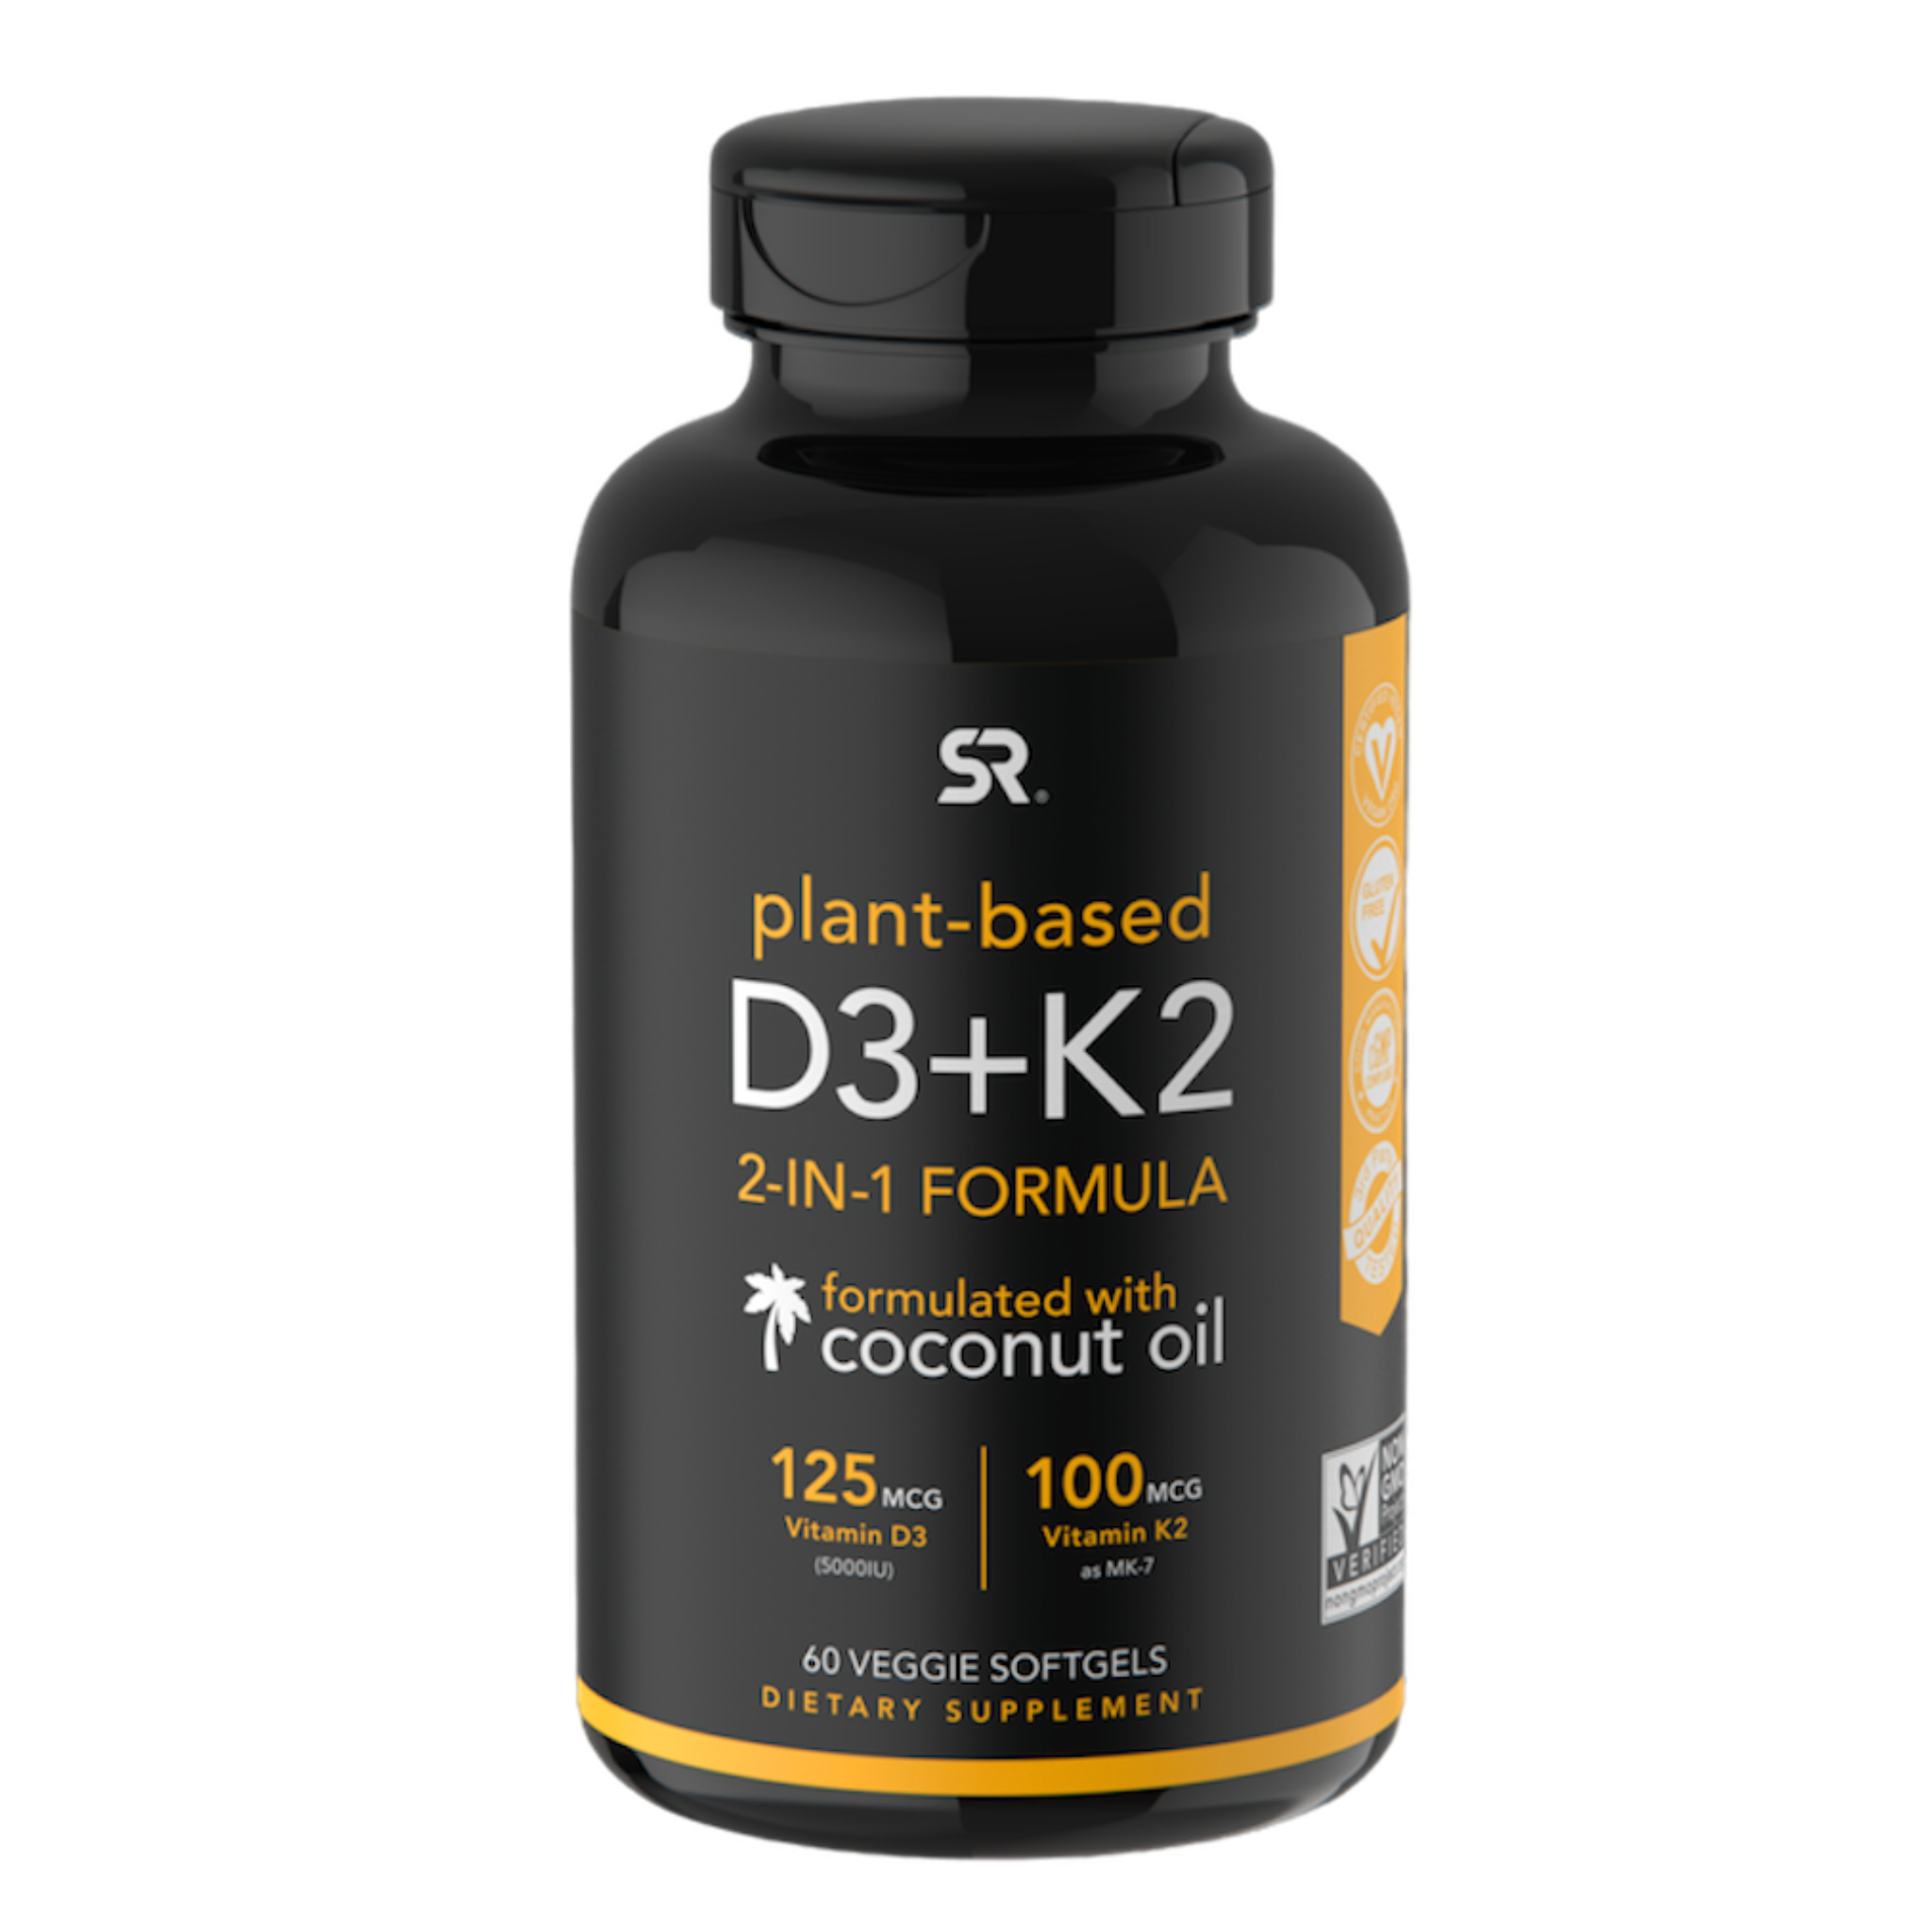 Vitamins sport. Sports research витамин k2 + d3 100 мкг/125 мкг 60 капсул. Krill Oil Omega 3. Астаксантин 12 мг. Американские витамины d3 5000+k2.